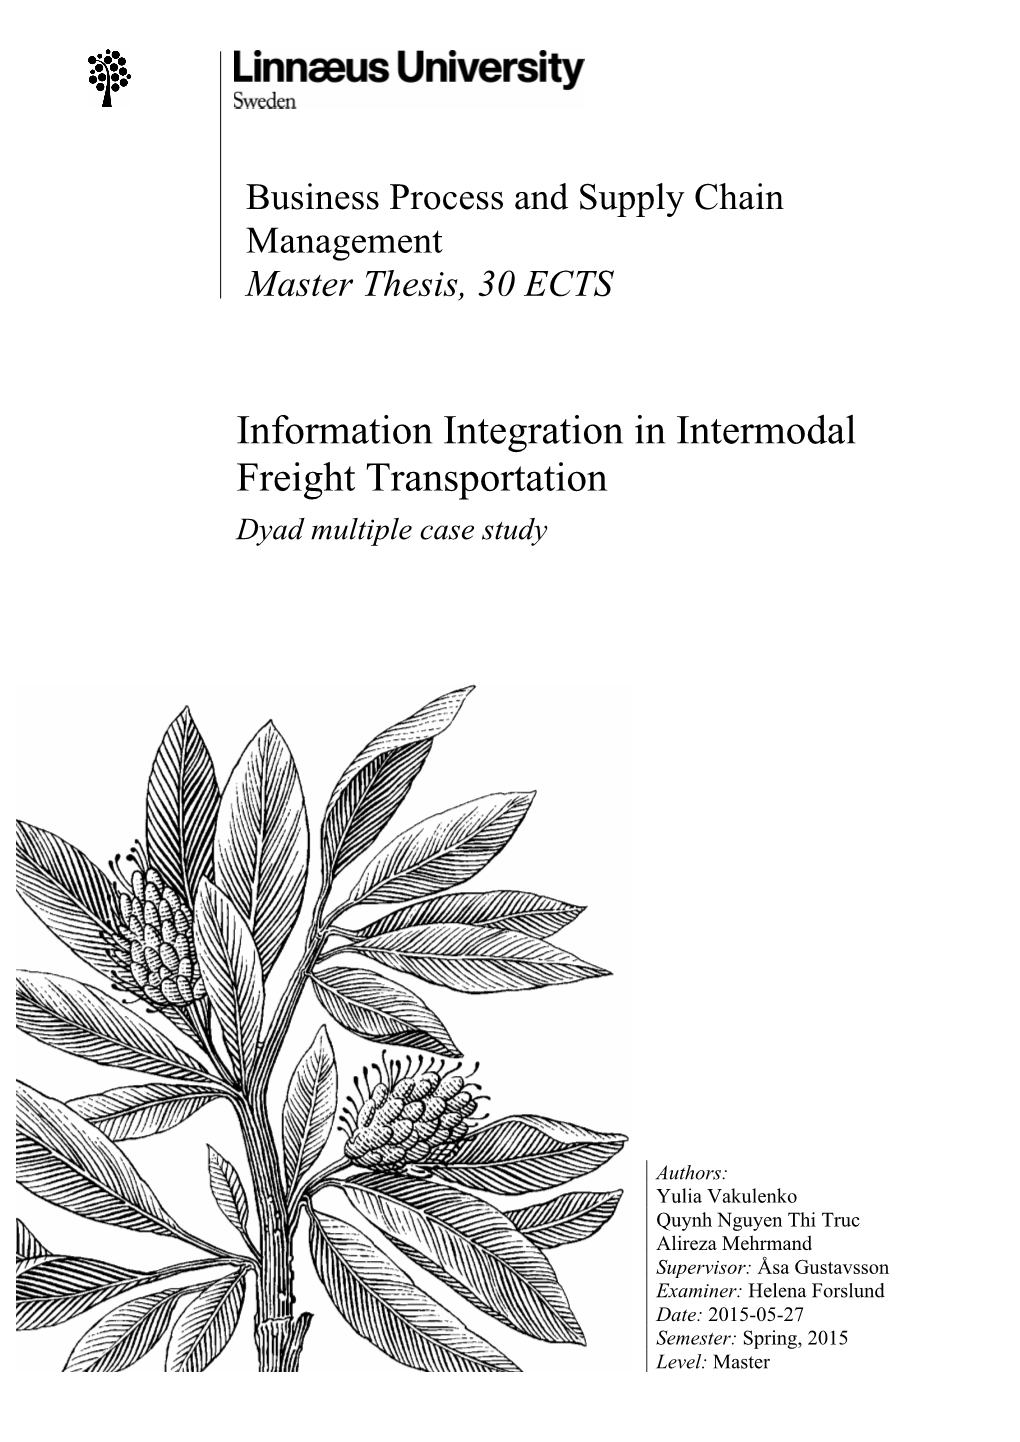 Information Integration in Intermodal Freight Transportation Dyad Multiple Case Study